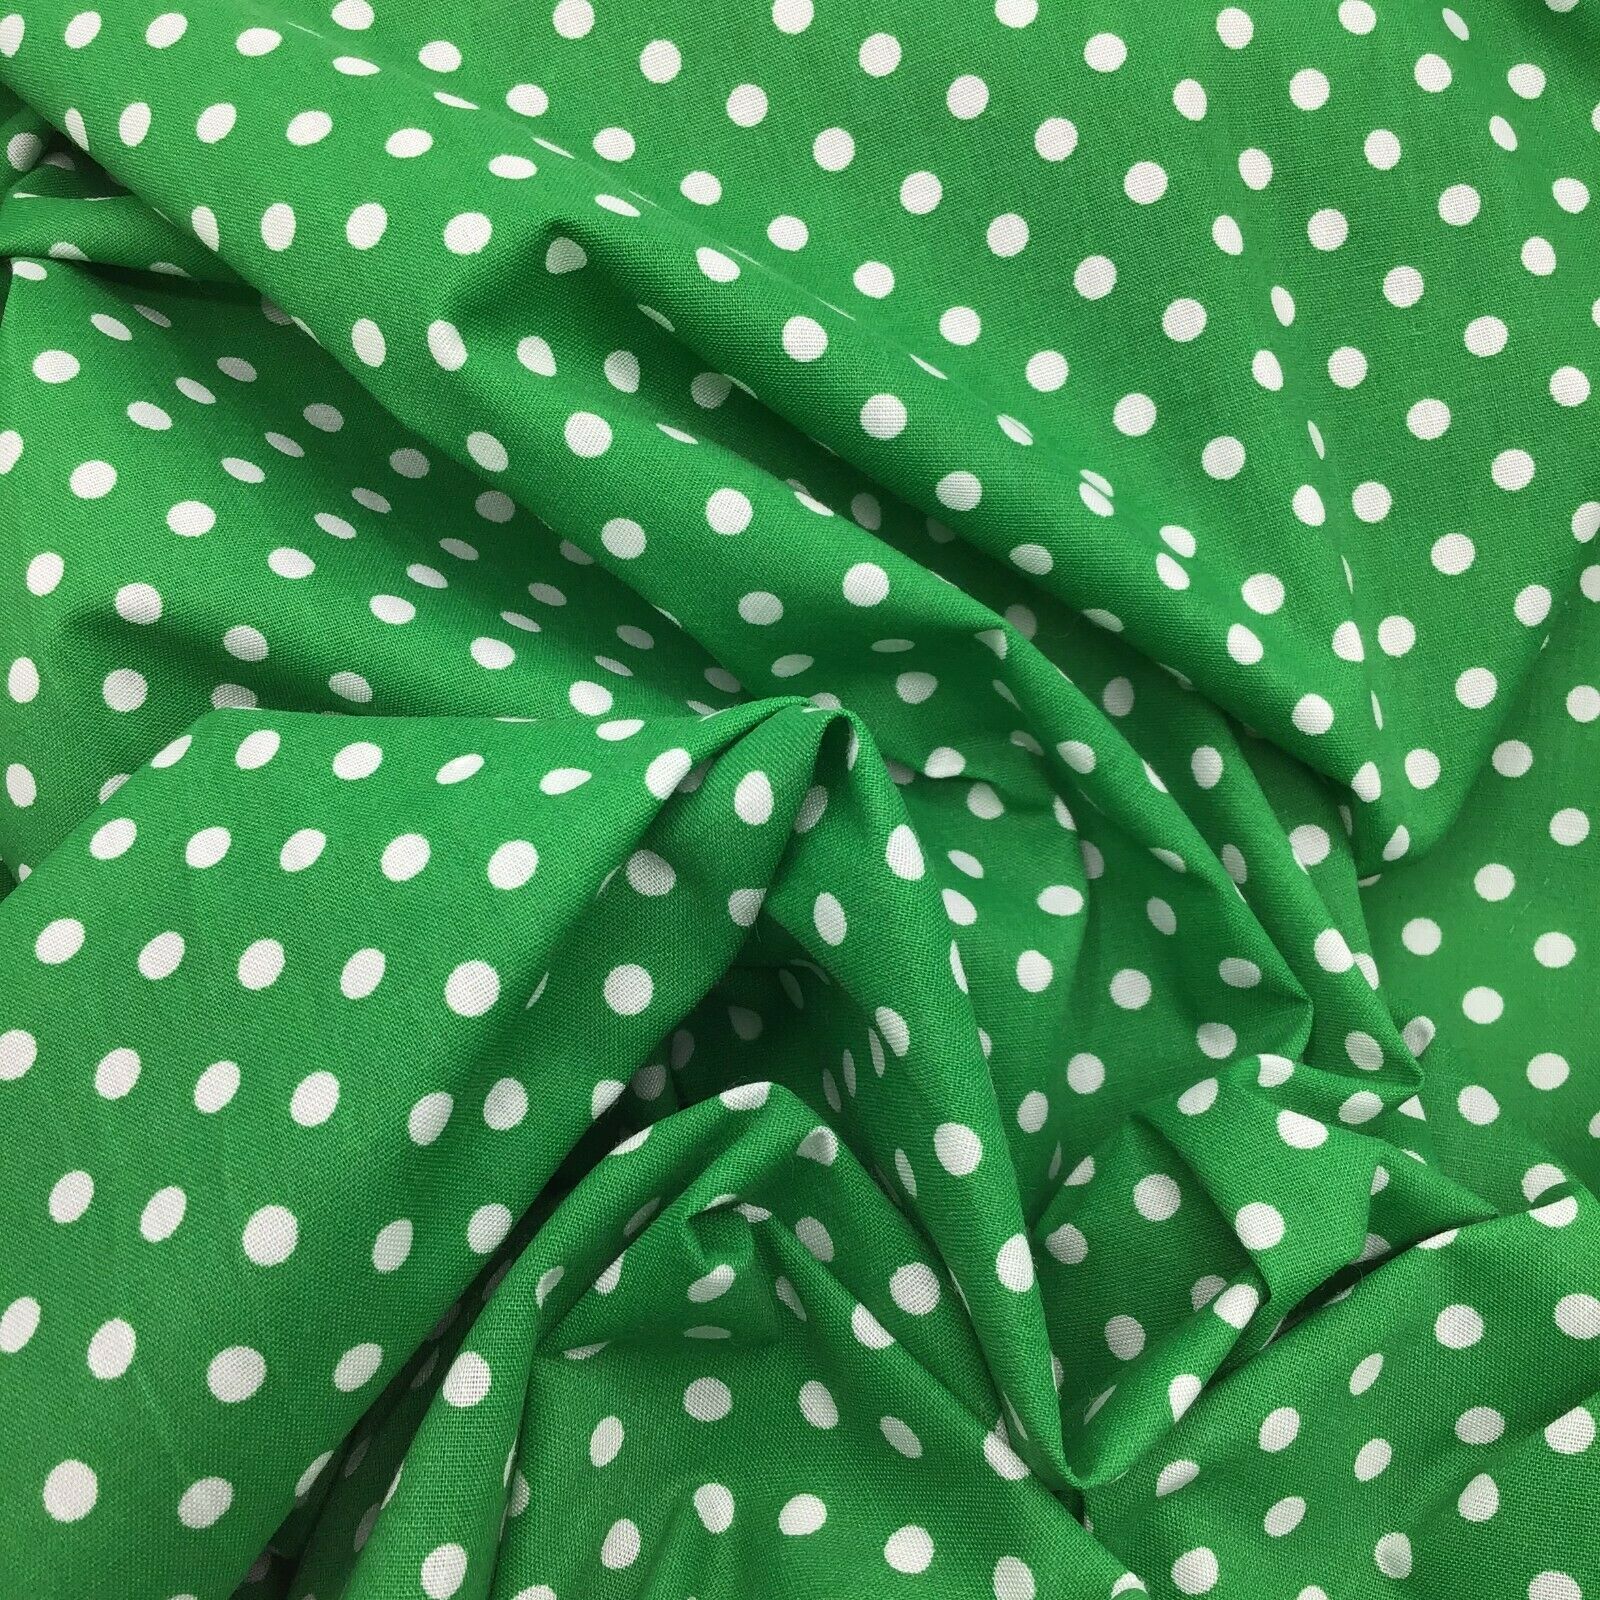 green polka dot dress making craft fabric